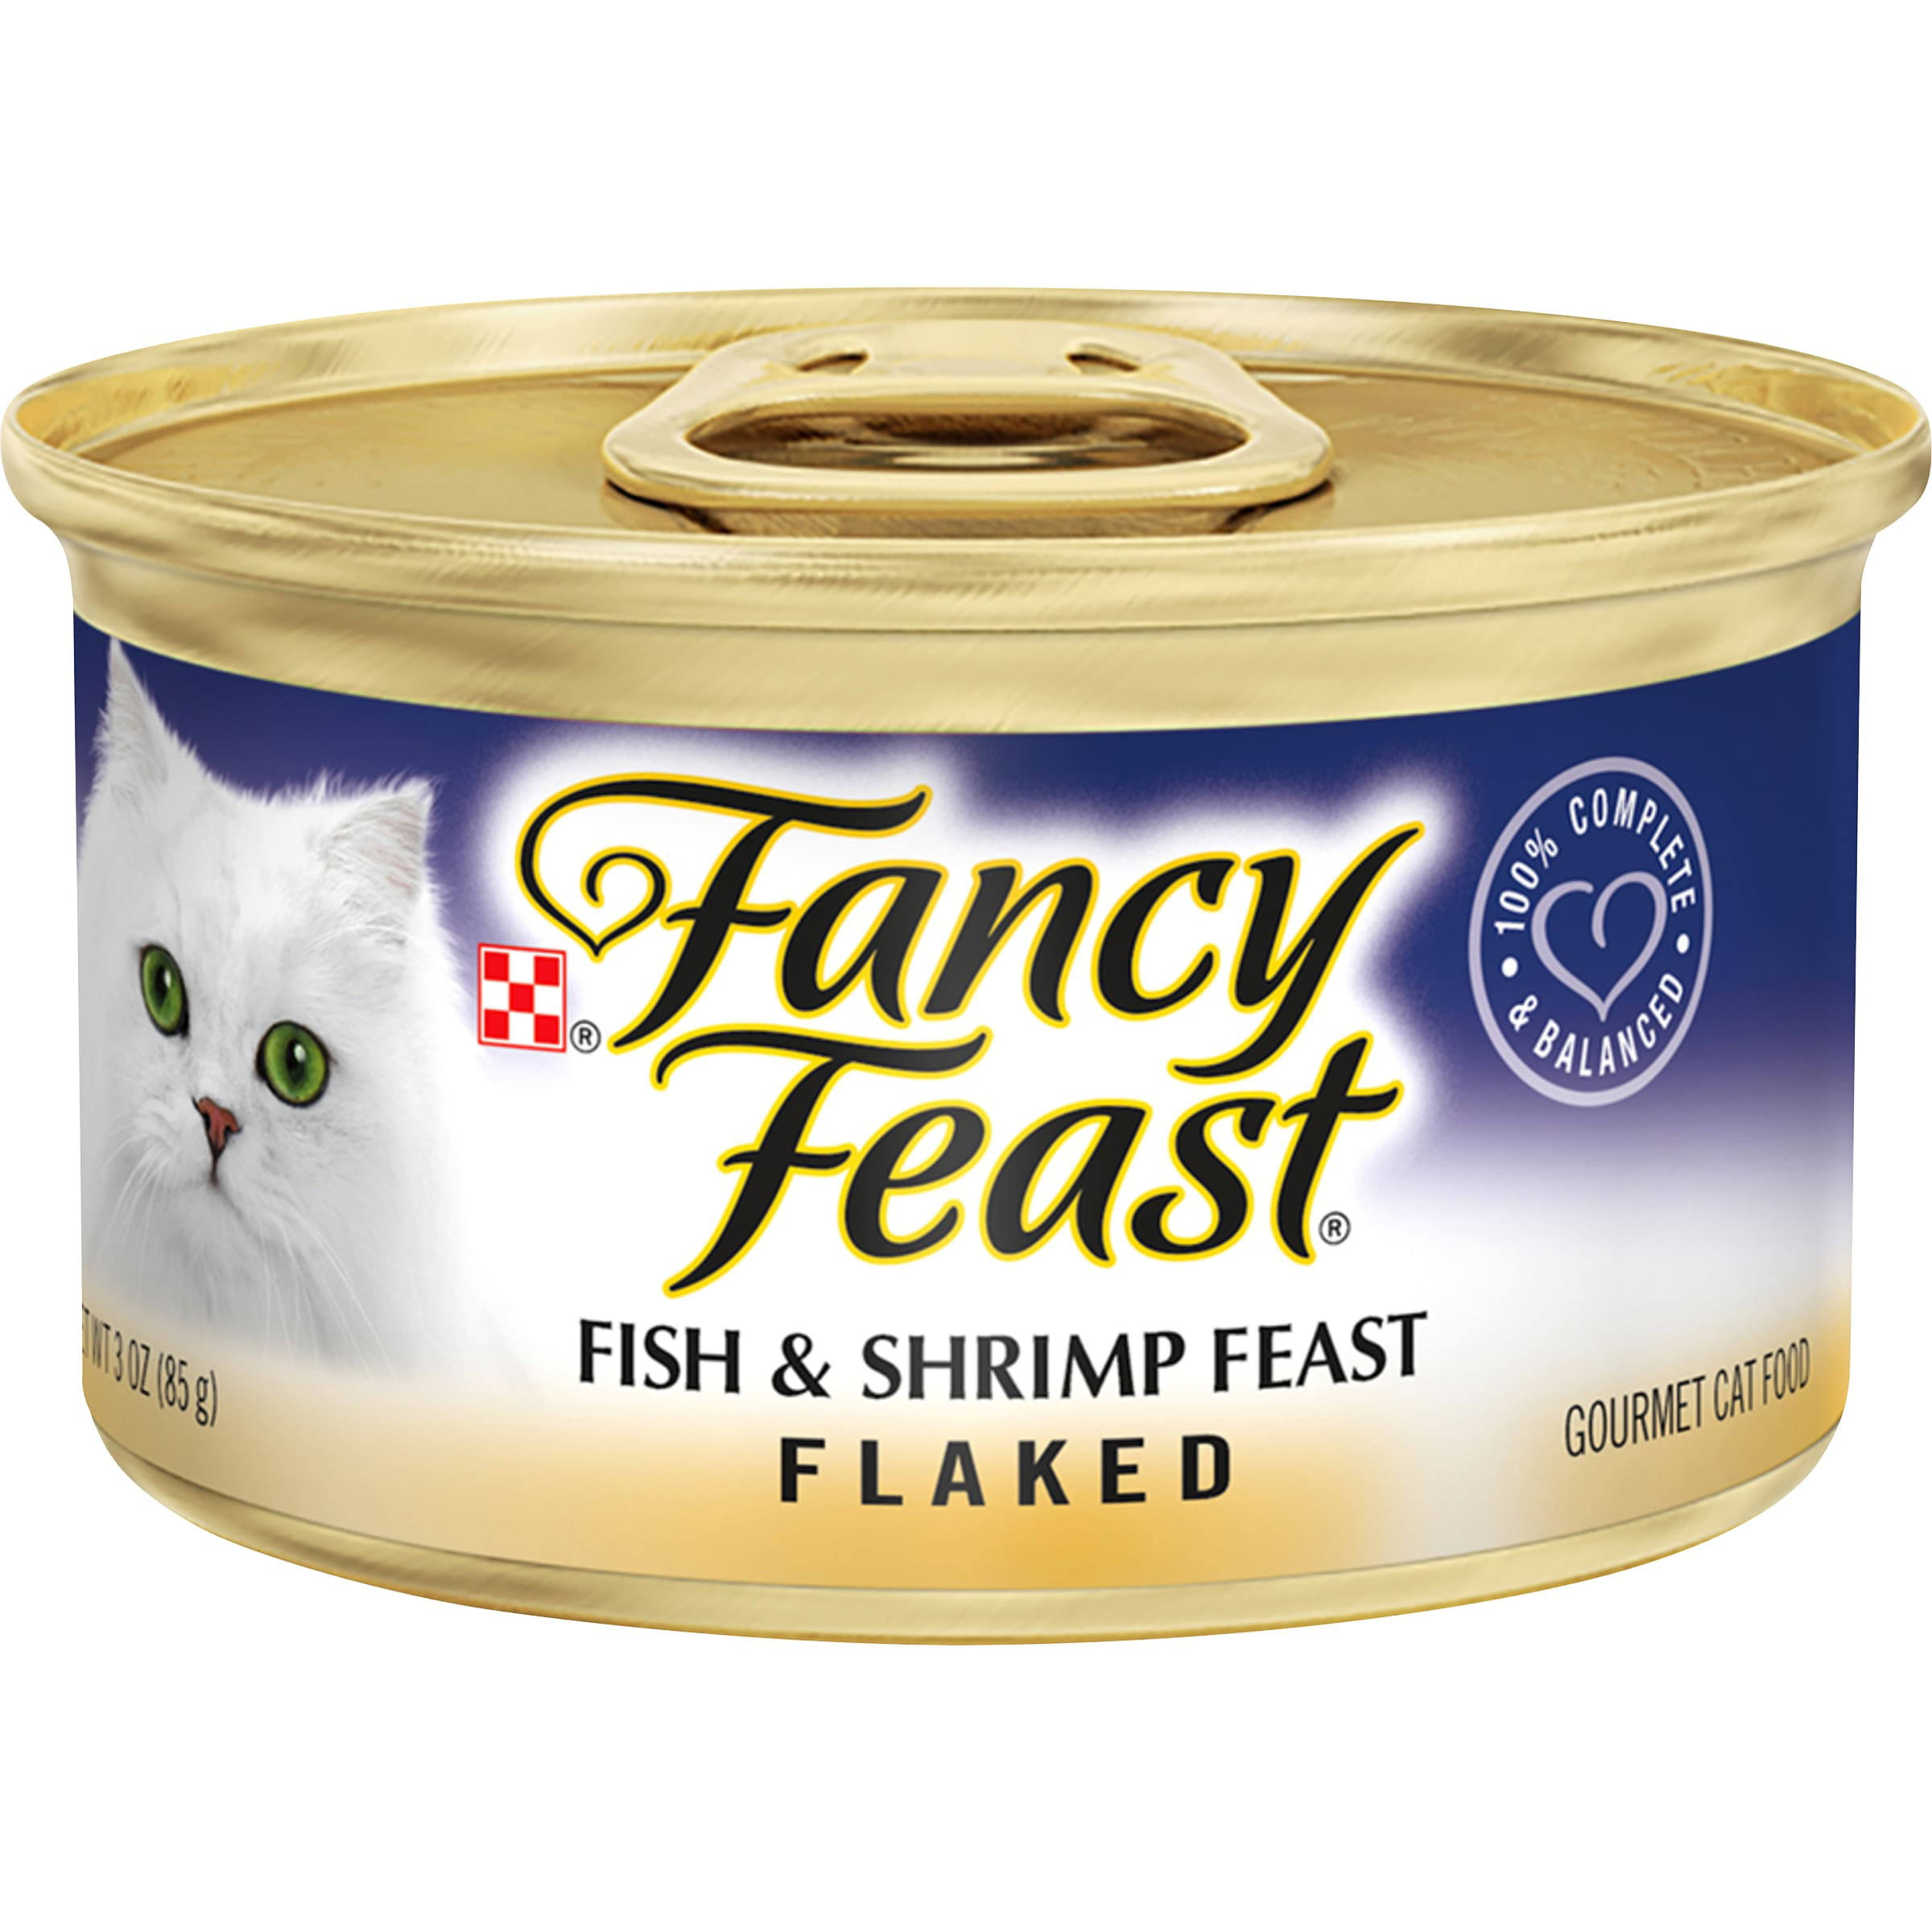 Fancy Feast Flaked Fish & Shrimp Feast Gourmet Cat Food - 3 oz